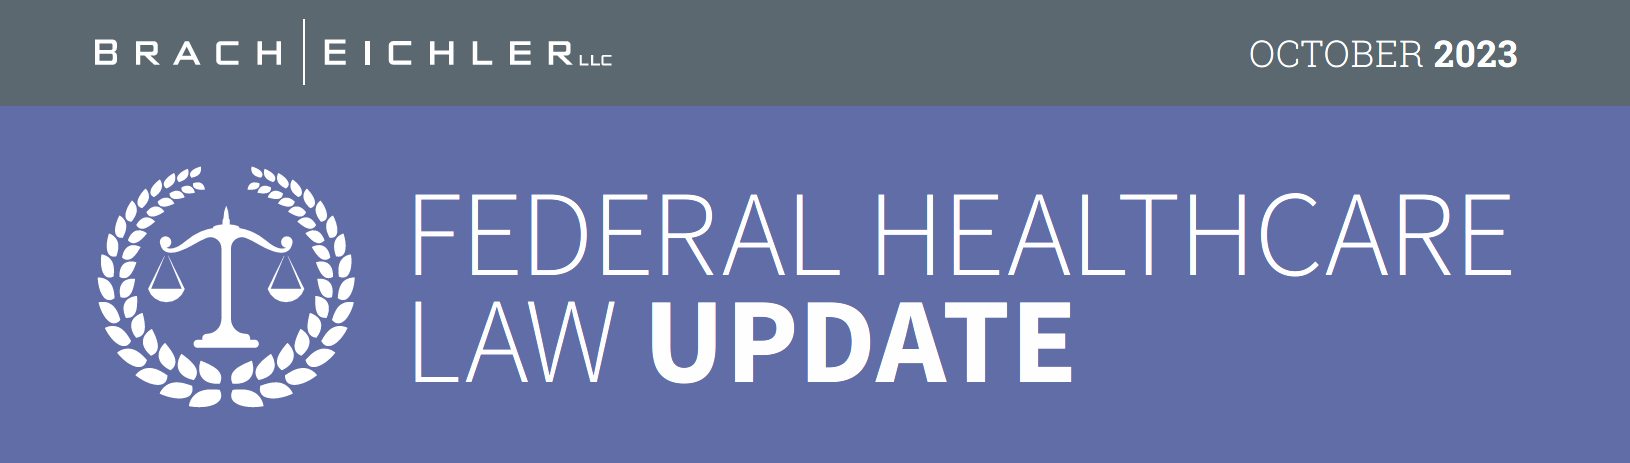 Federal Healthcare Law Update – October 2023 - Brach Eichler